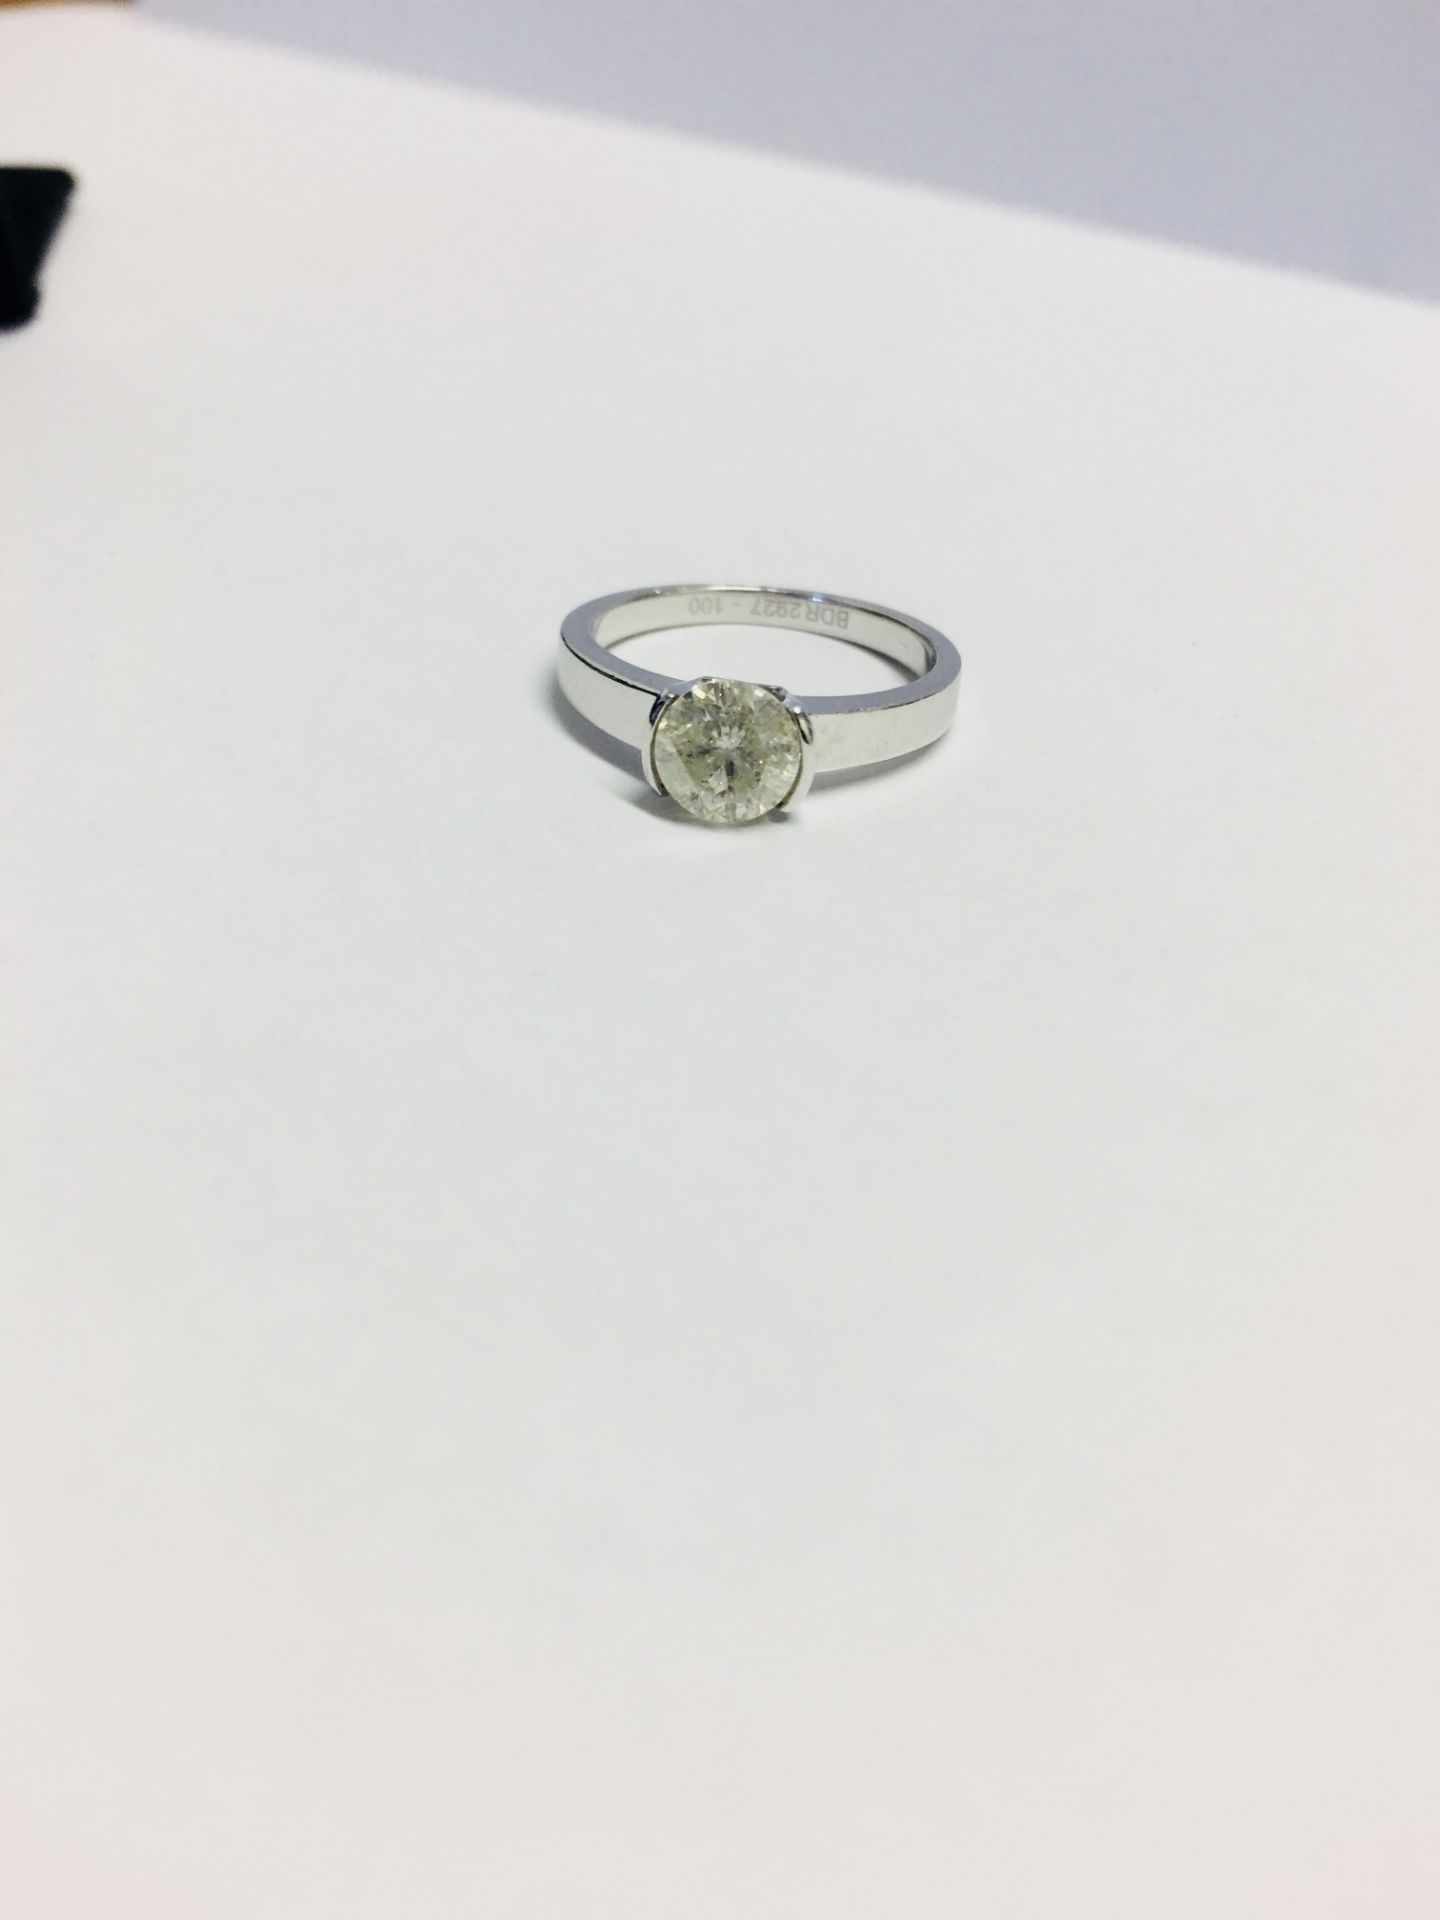 1ct brilliant cut diamond solitaire ring,diamond is L colour i2 clarity,platinum mount uk London - Image 2 of 4